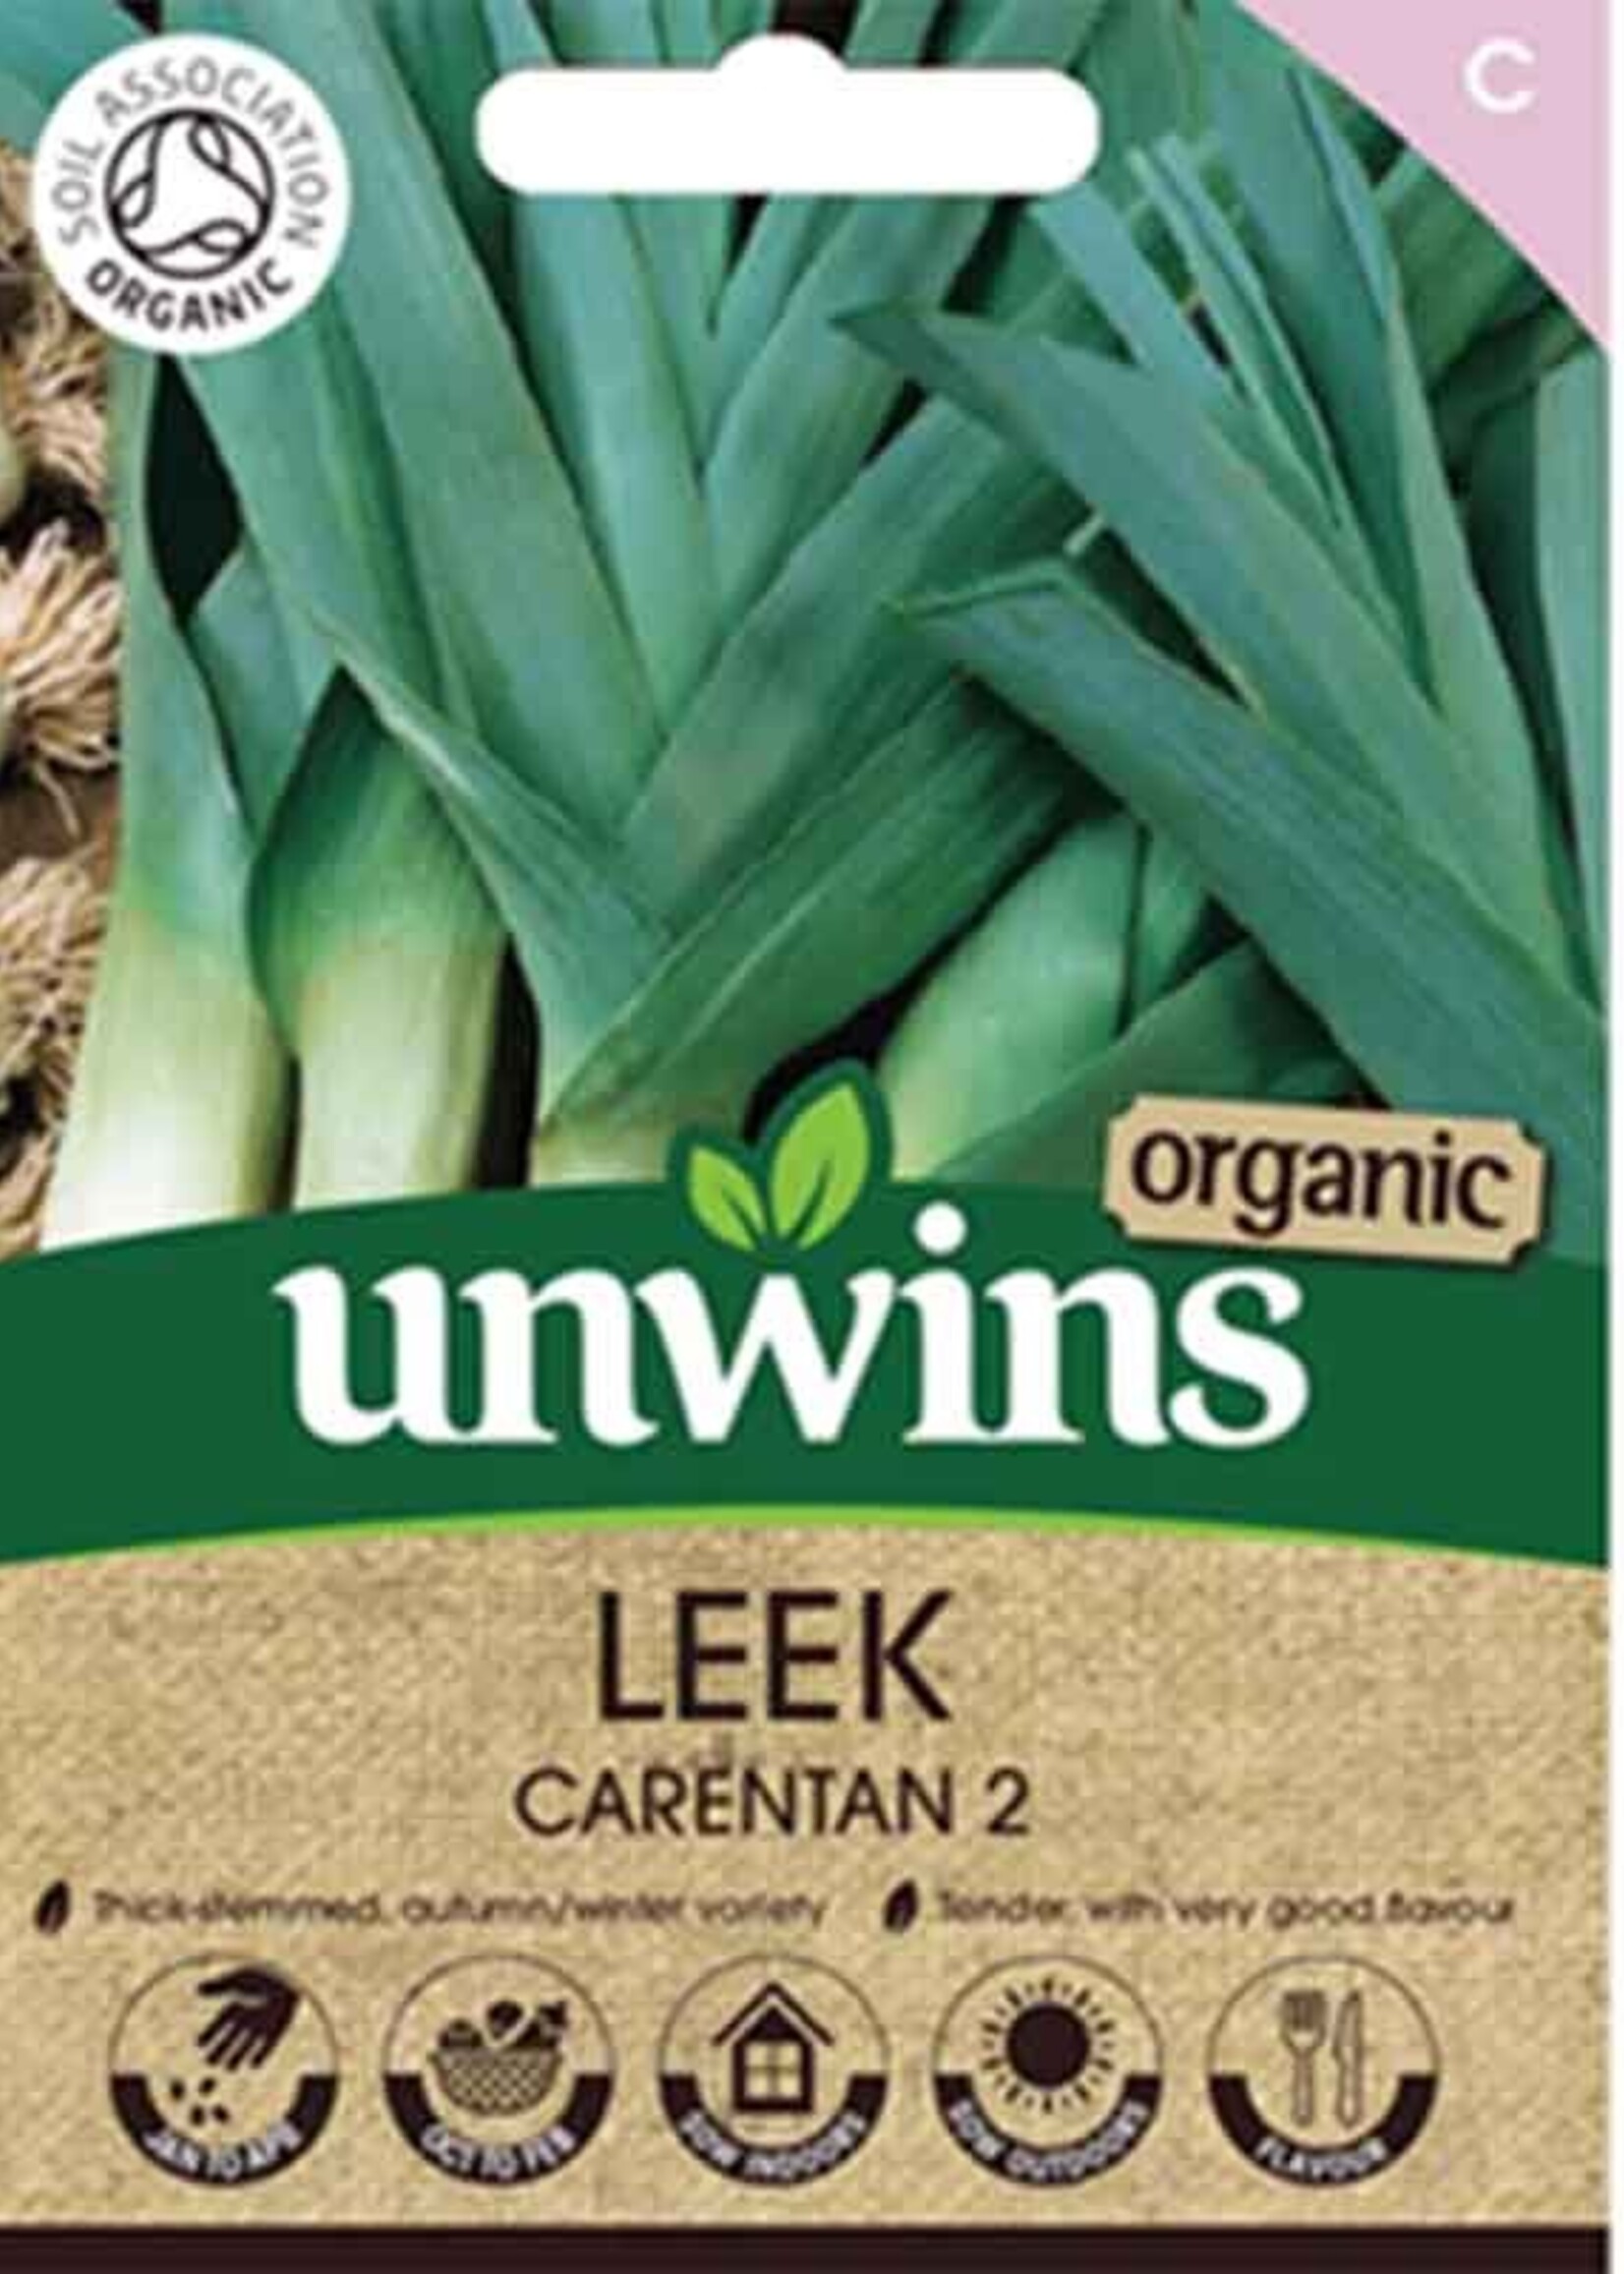 Unwins Organic Leek - Carentan 2